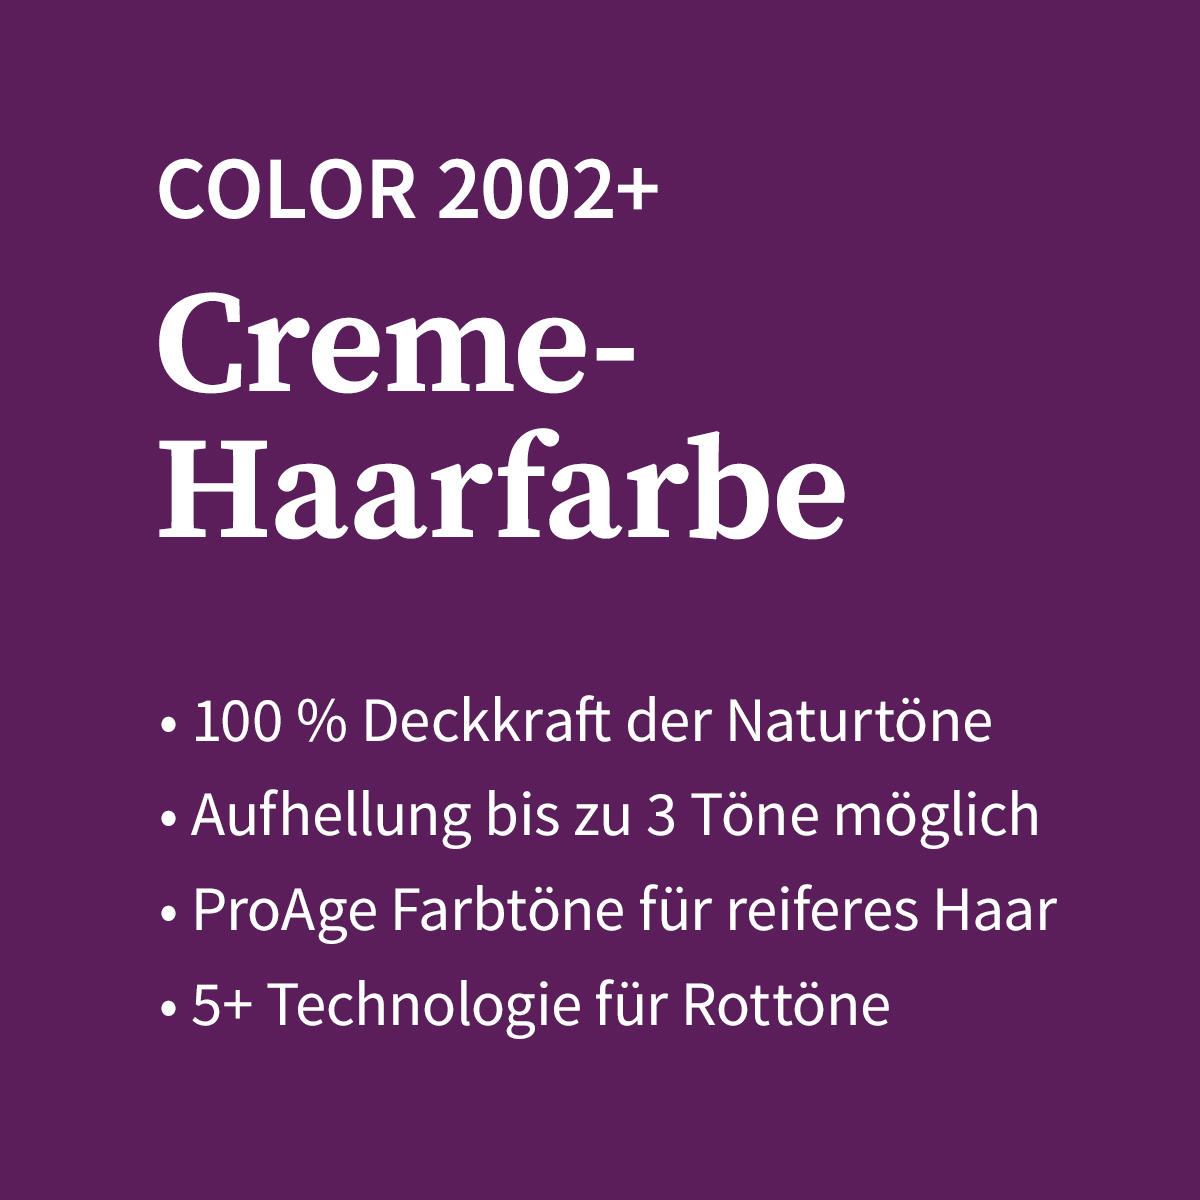 Basler Color 2002+ Cremehaarfarbe 7/44 mittelblond rot intensiv, Tube 60 ml - 4